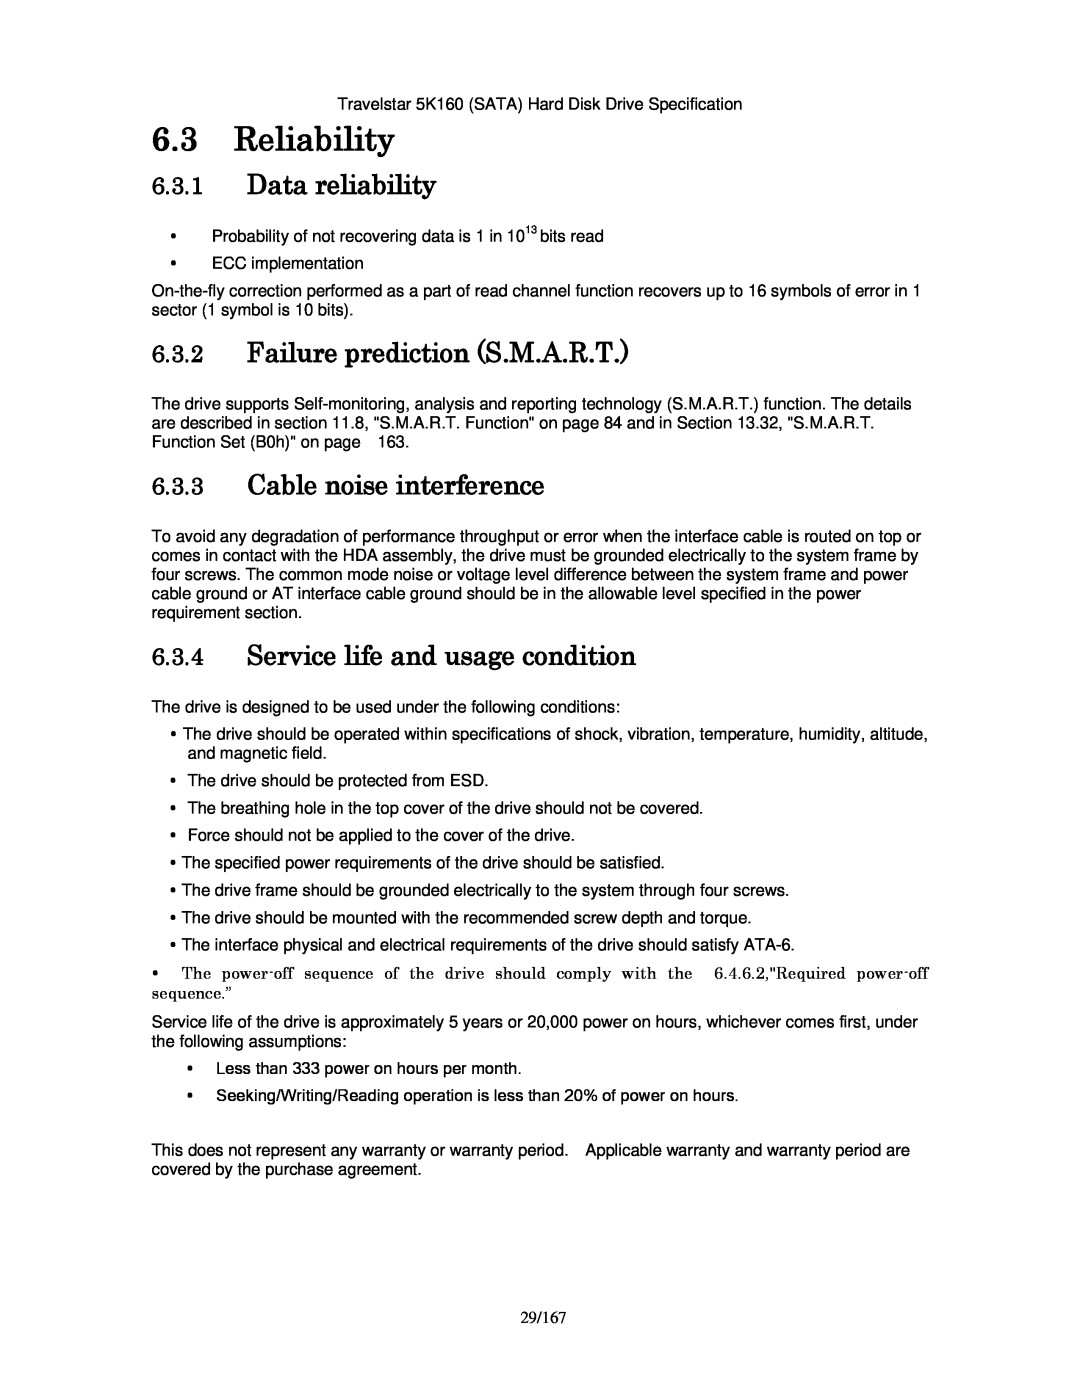 Hitachi HTS541612J9SA00 manual Reliability, Data reliability, Failure prediction S.M.A.R.T, Cable noise interference 